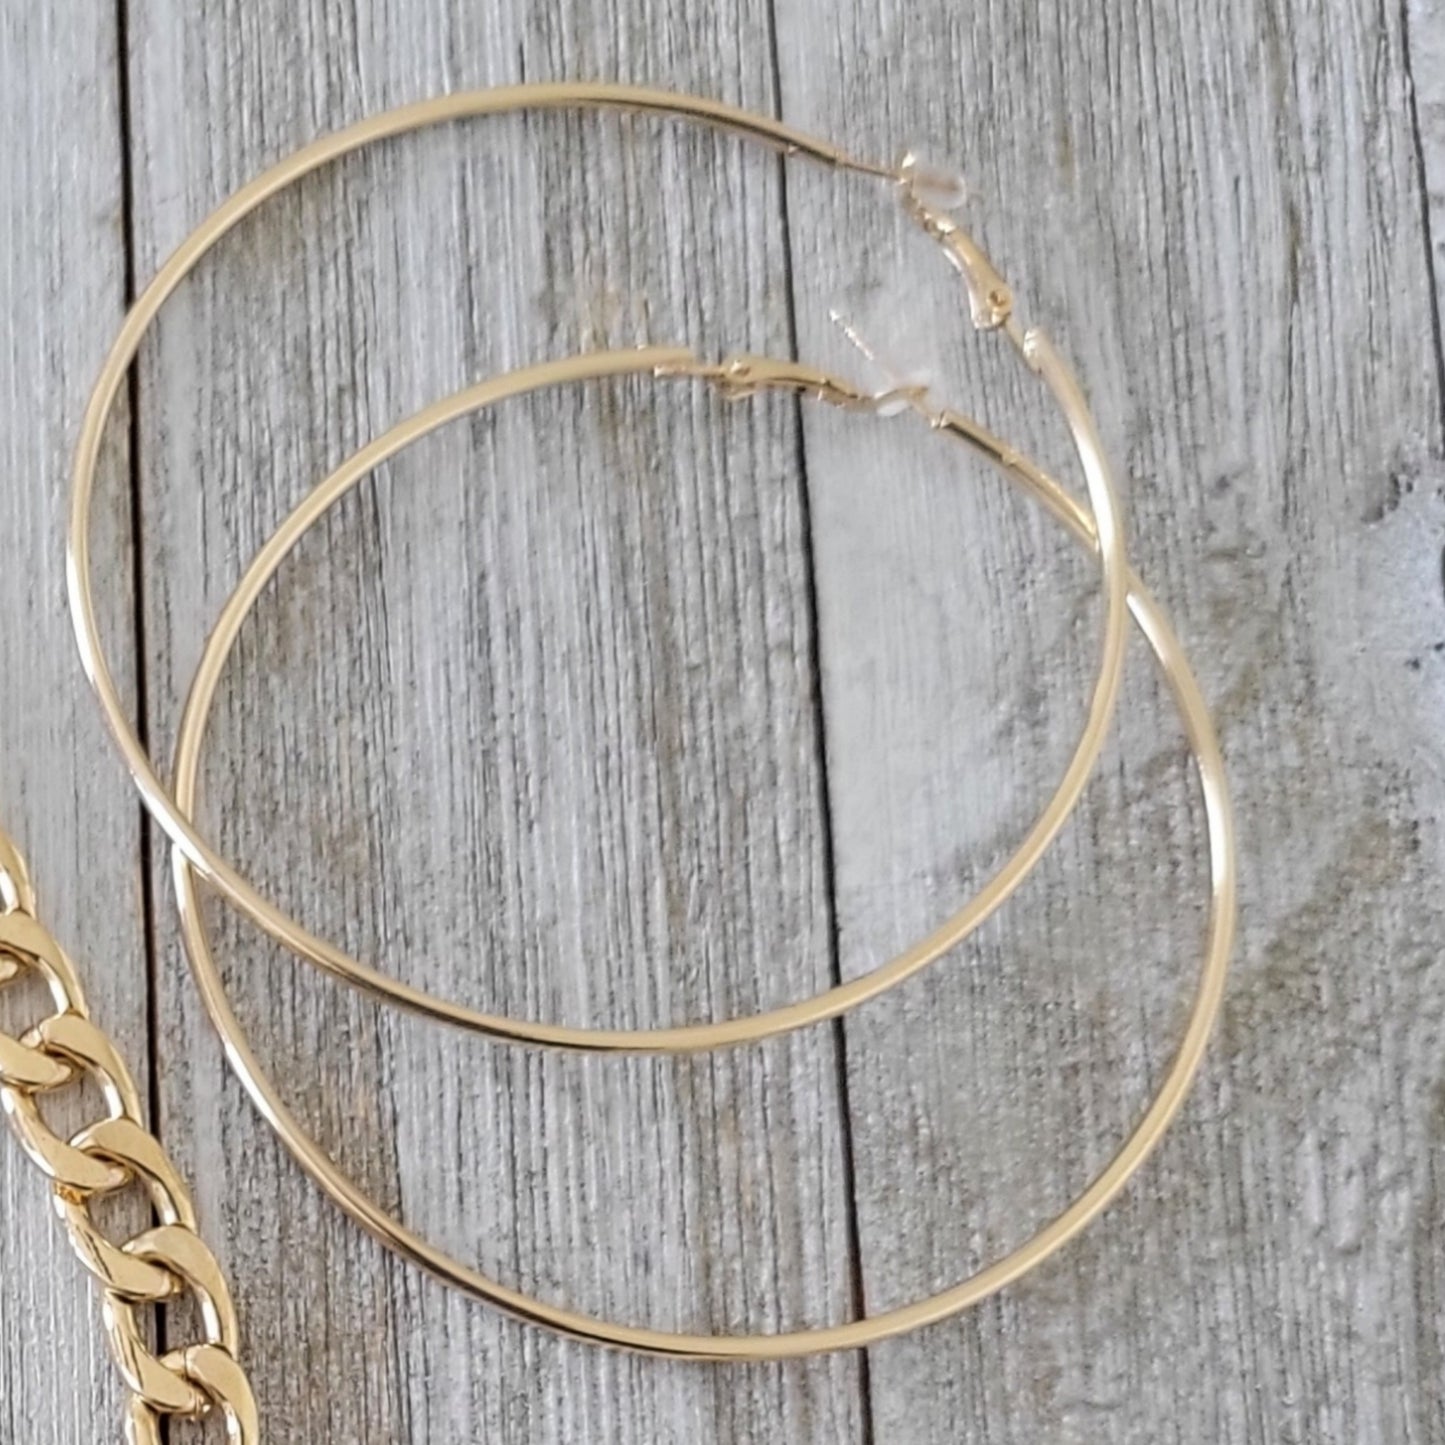 Glam Gold Heart Necklace, Bracelet & Hoop Earrings Set